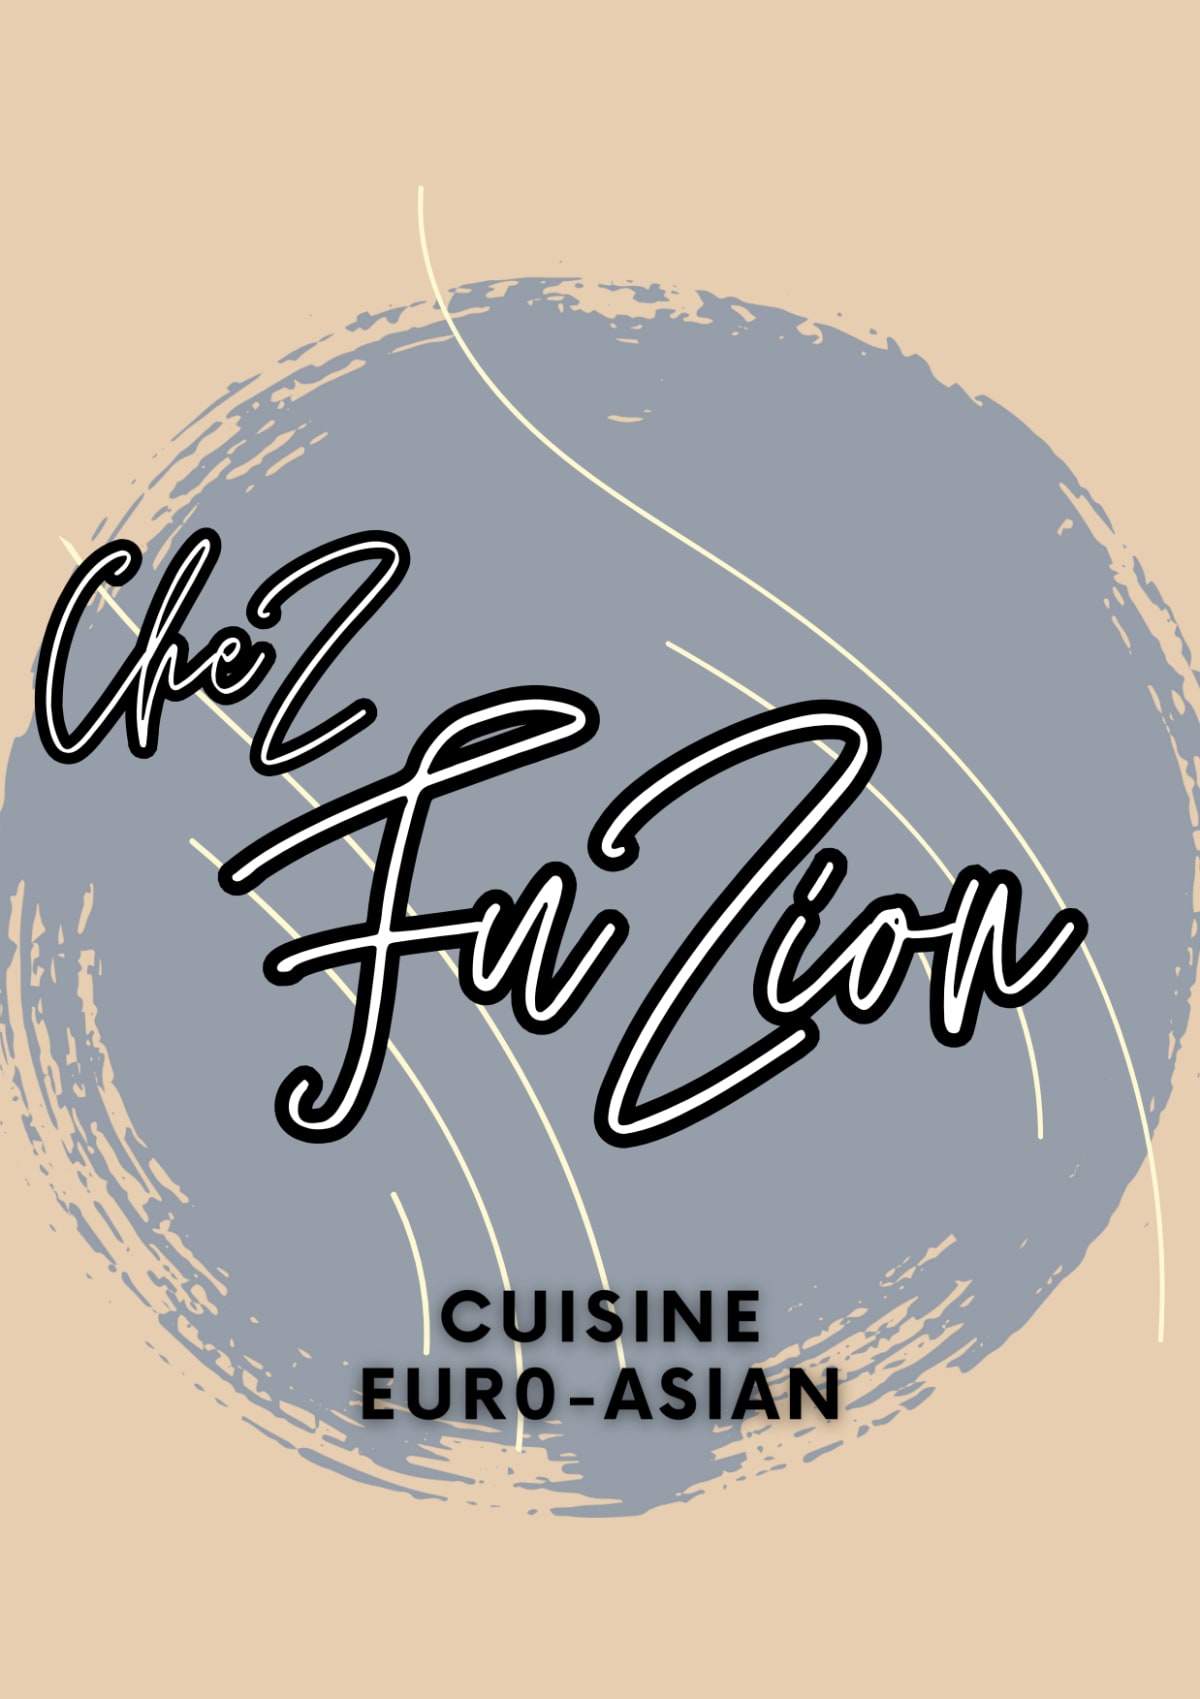 Chez Fuzion menu